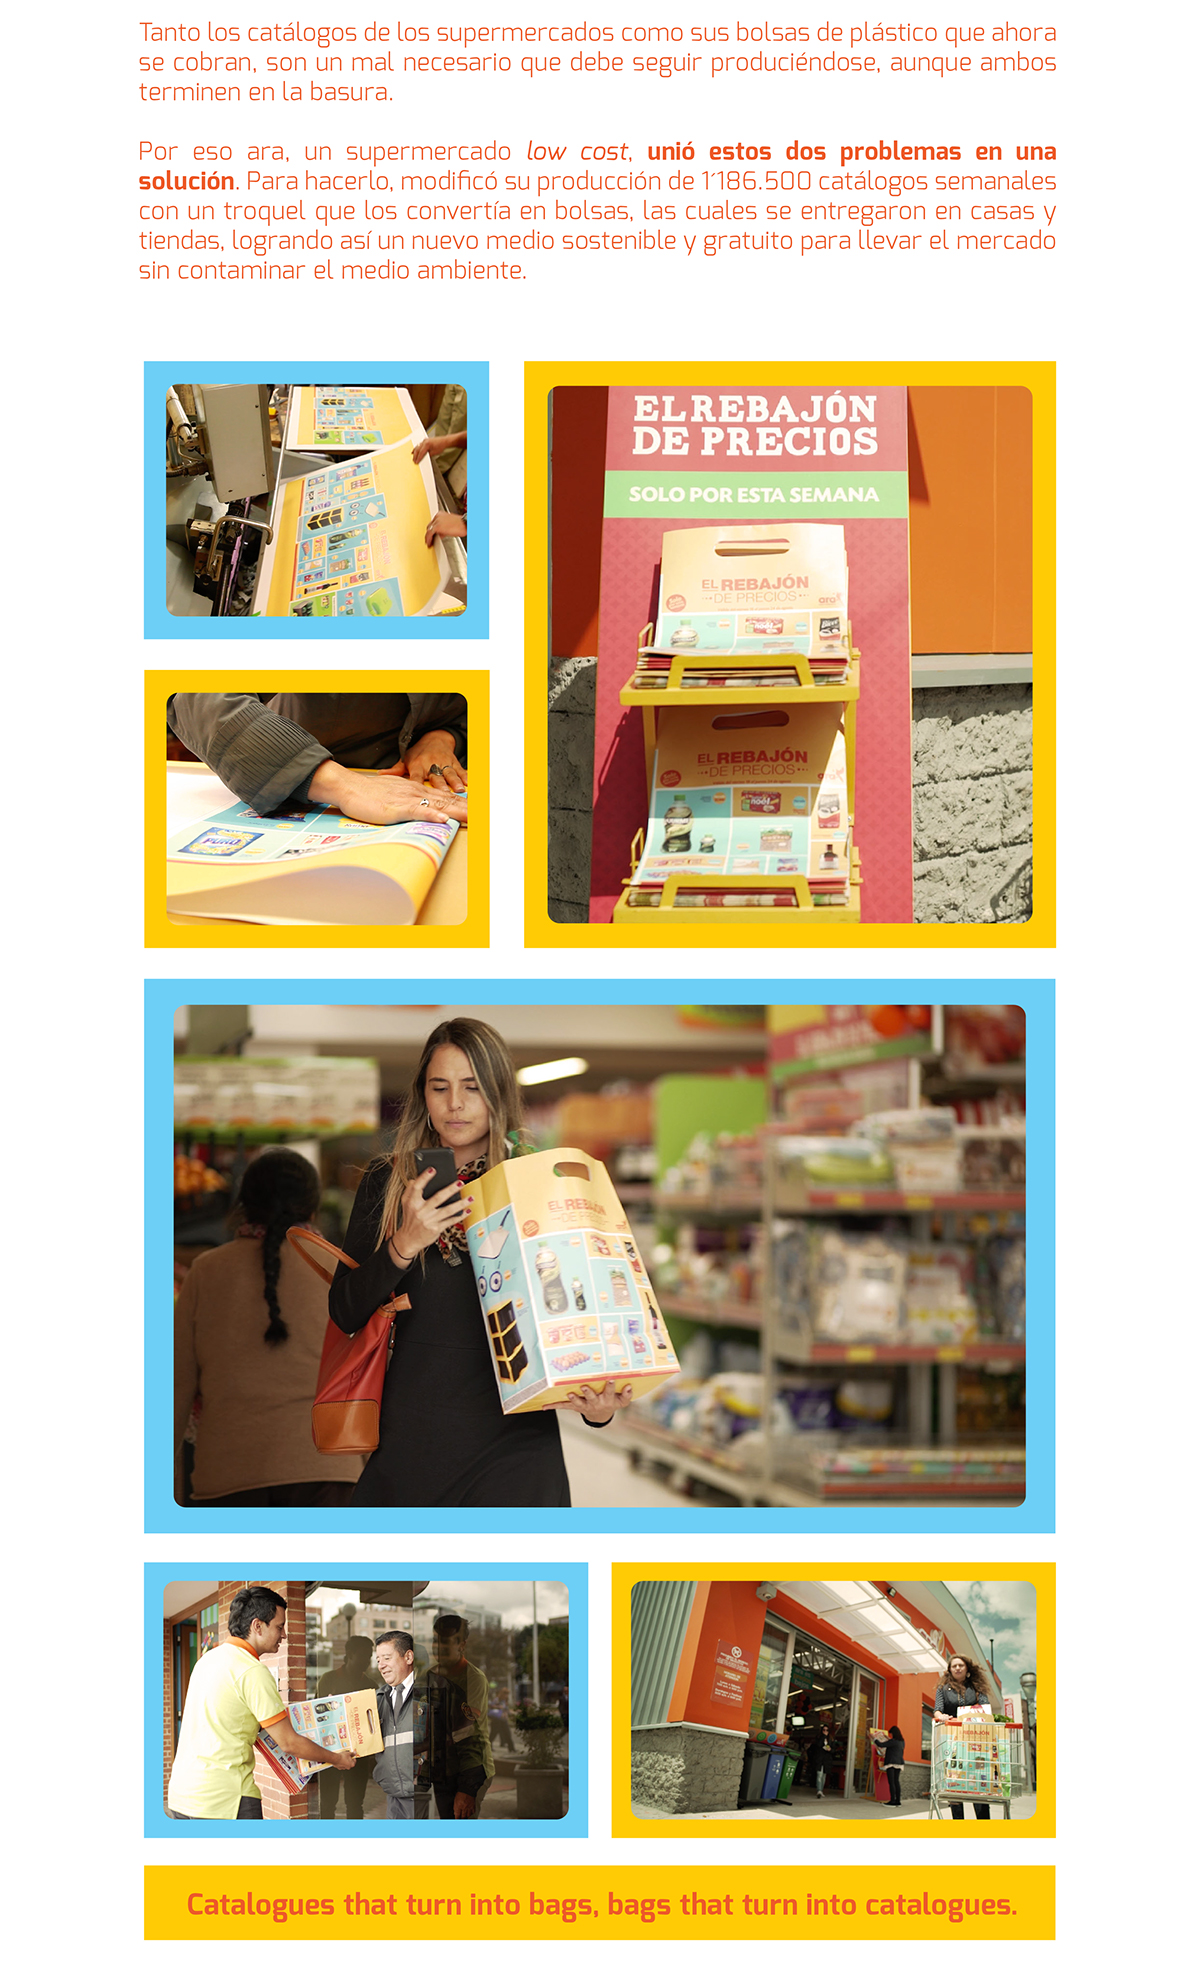 bag Catalogue bolsa catalogo Supermarket supermercado Alimentos Food  productos producs